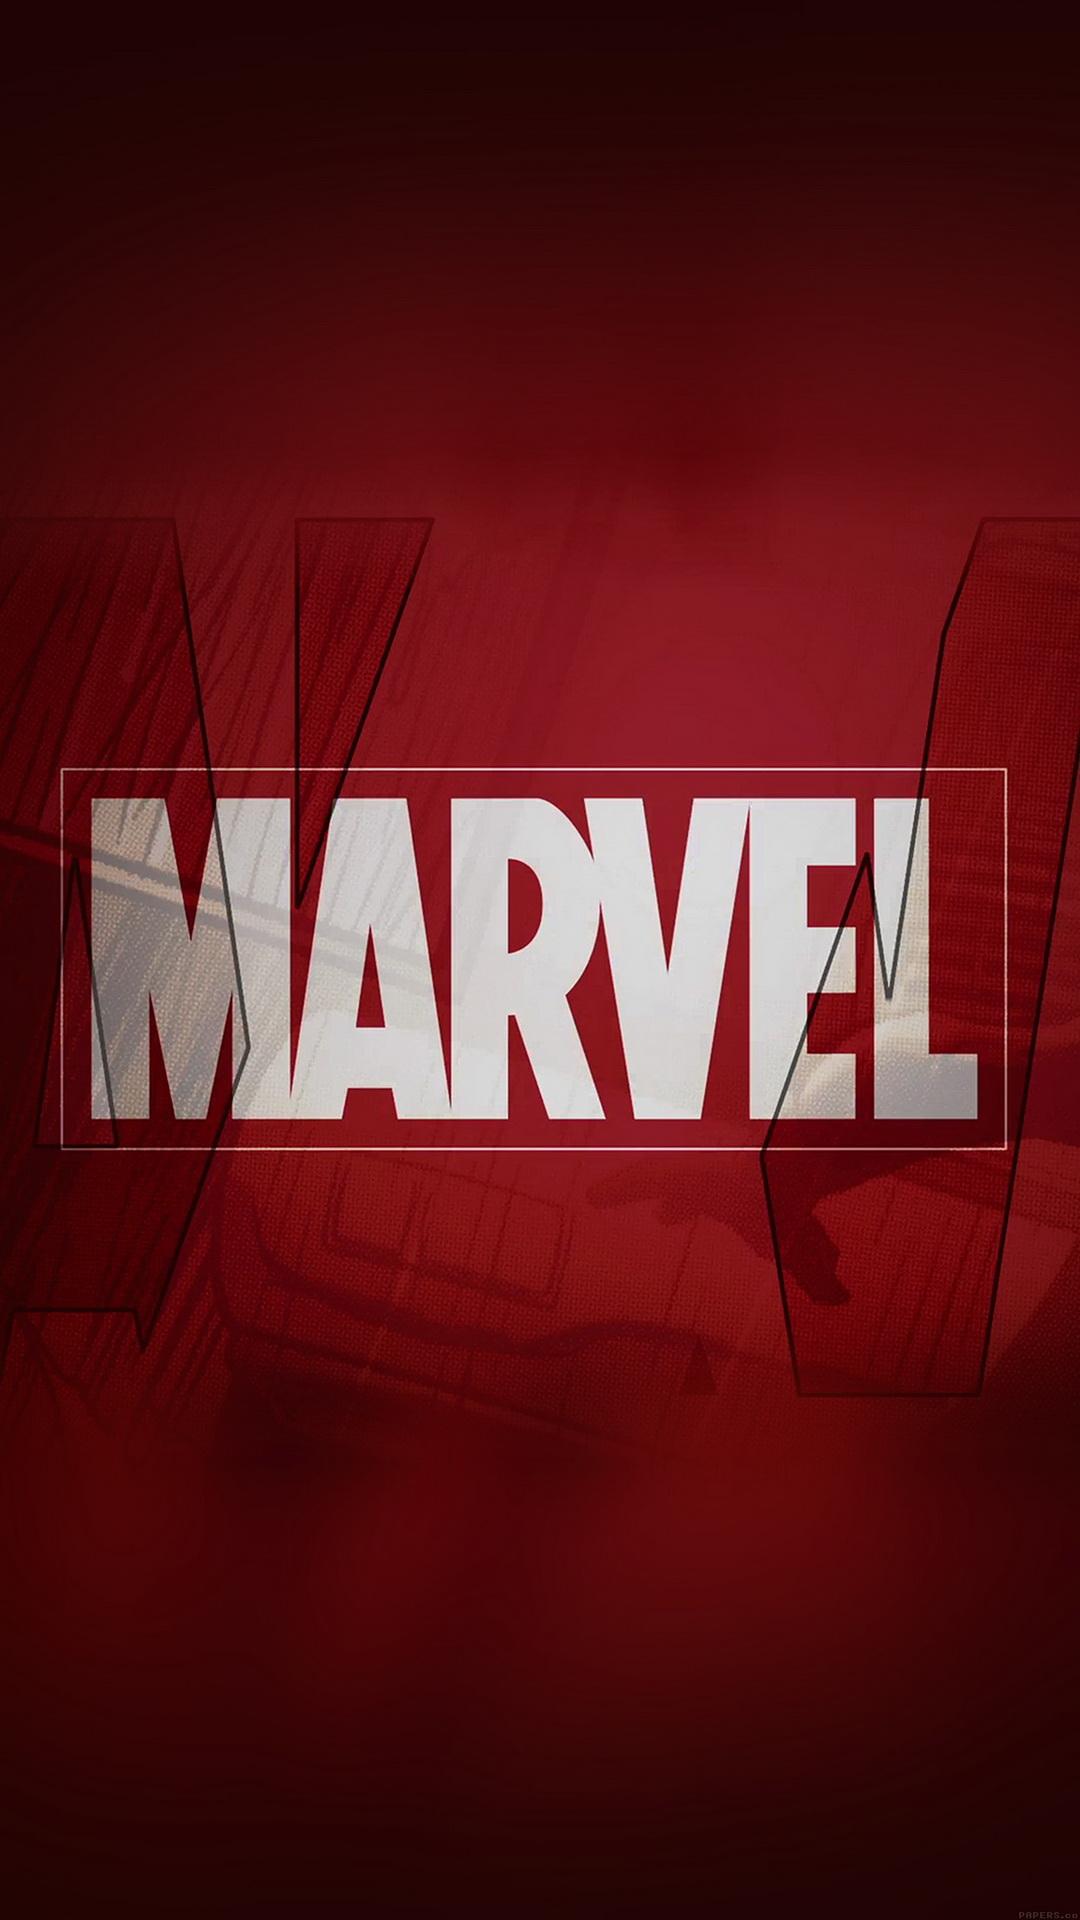 Marvel LogoK Wallpaper, Free And .htc Wallpaper.com